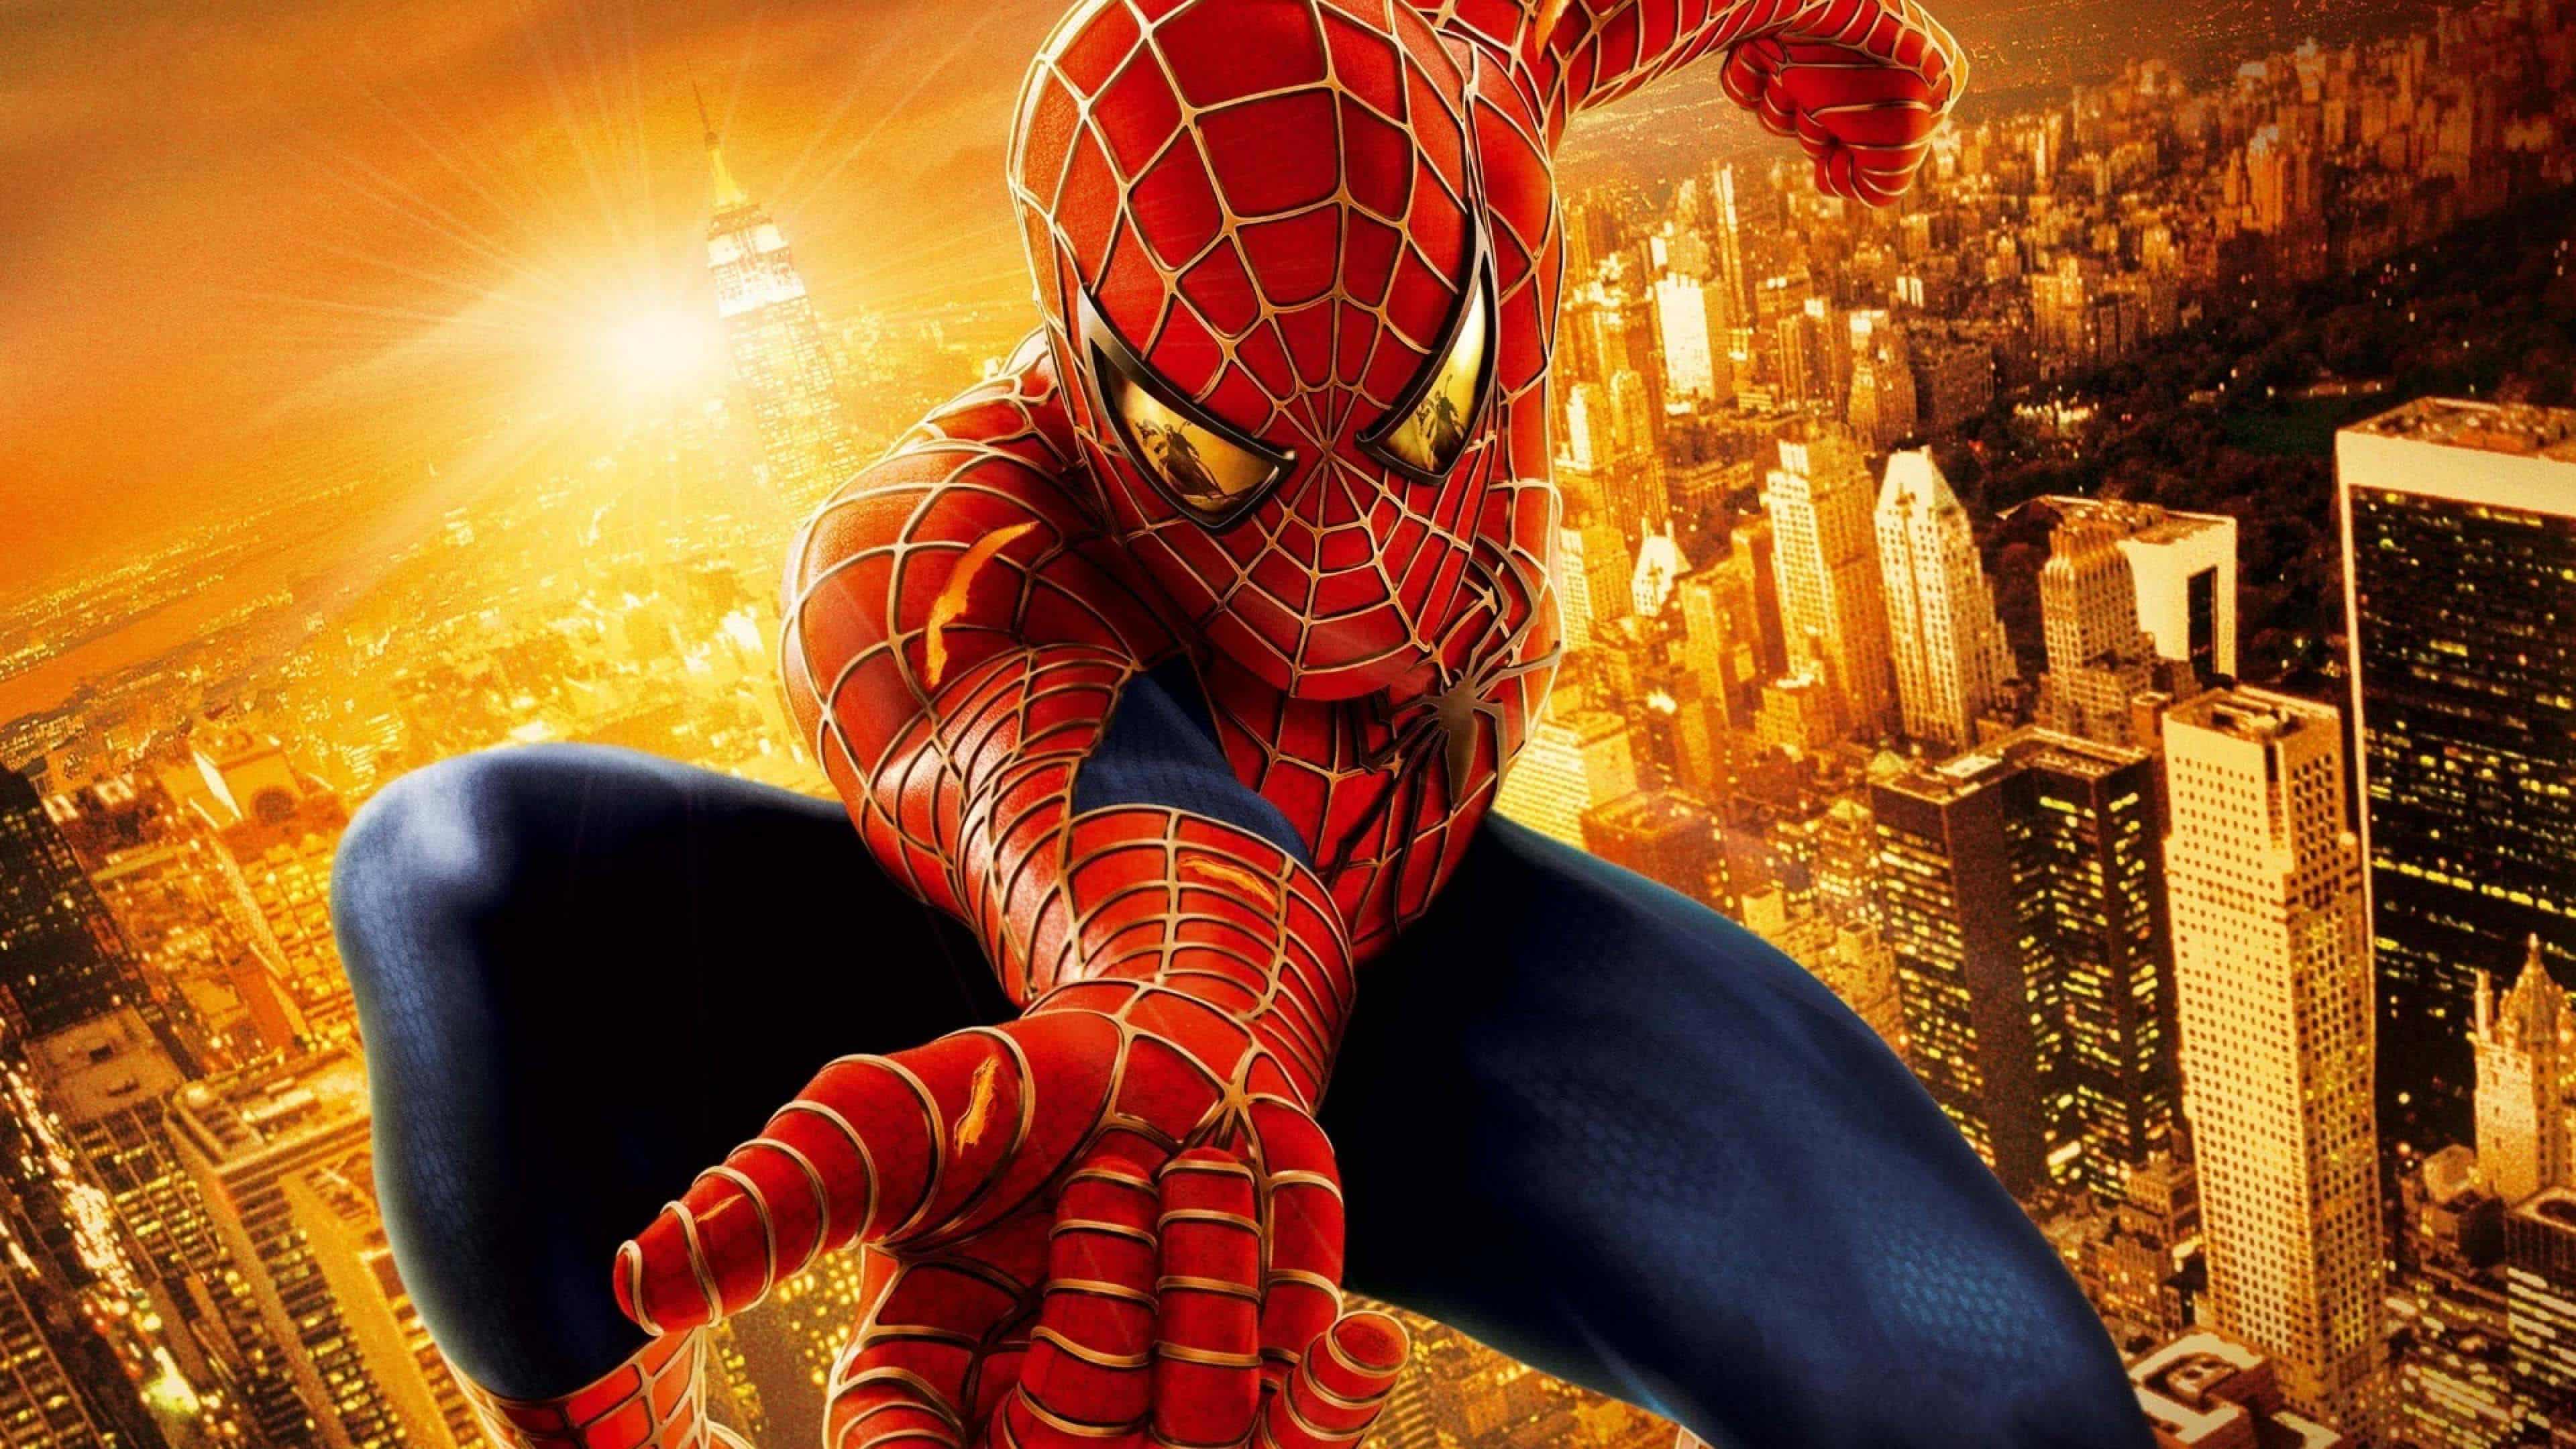 spiderman wallpaper,spider man,superhero,fictional character,cg artwork